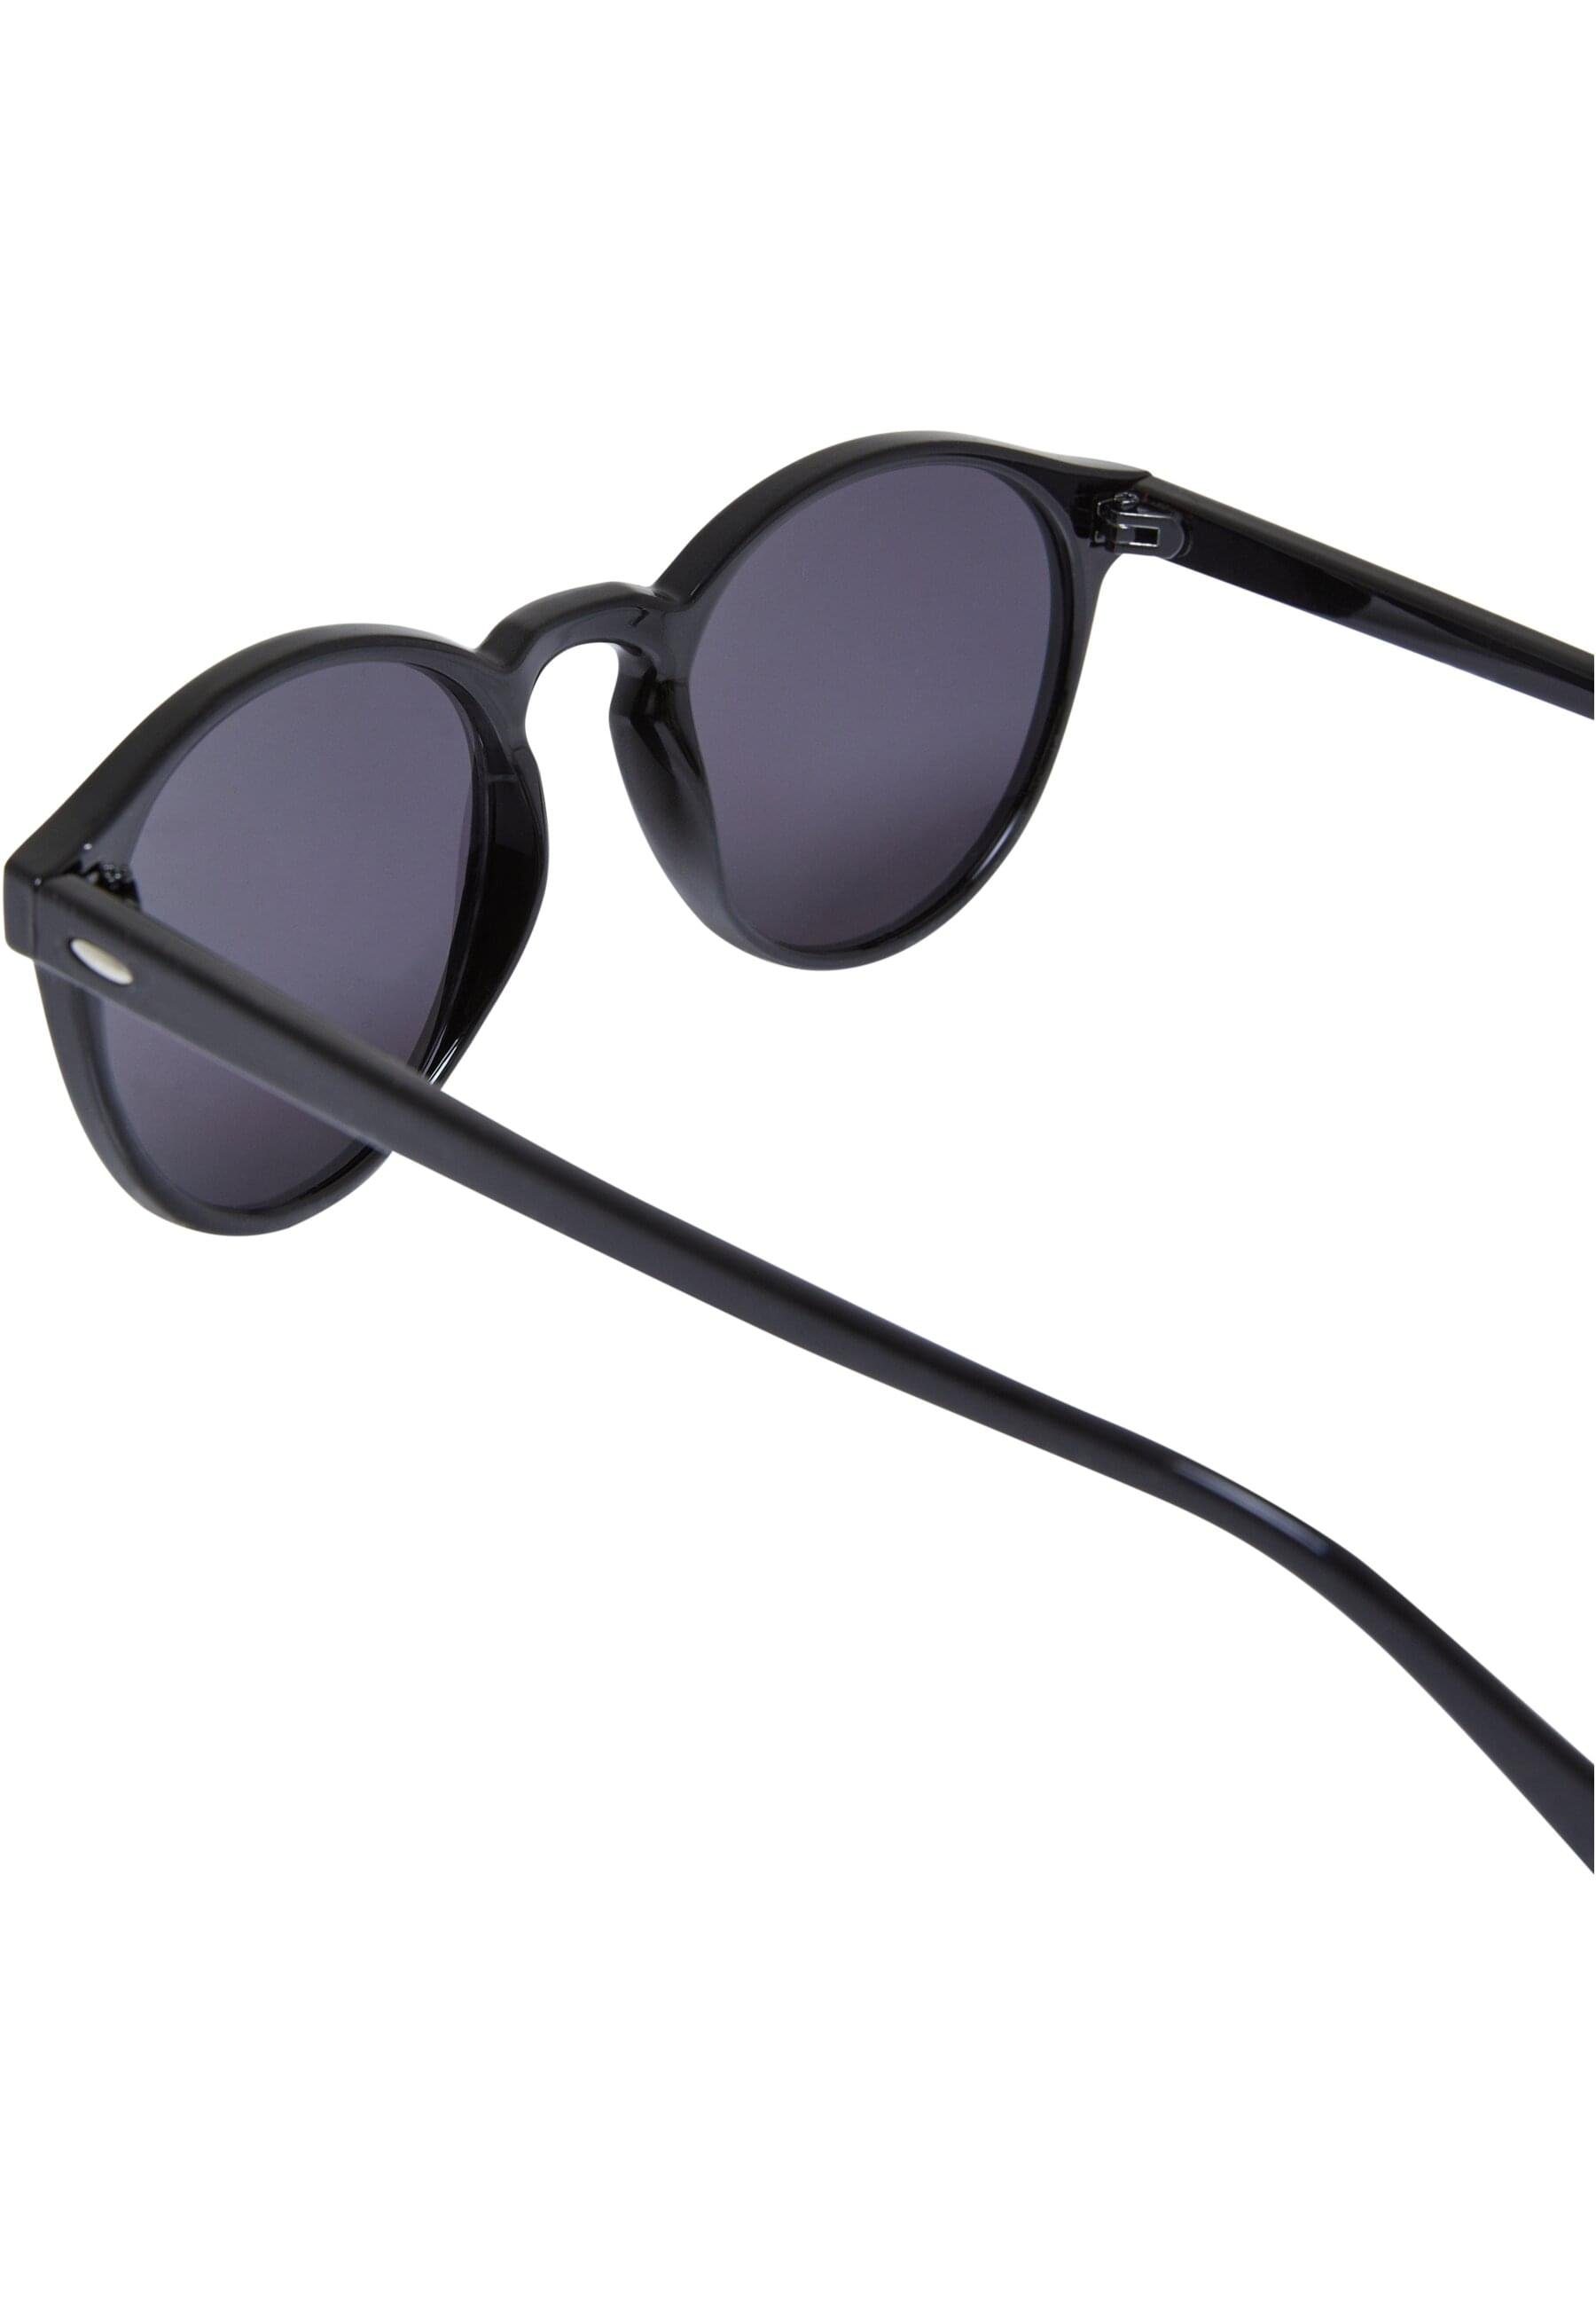 Sunglasses CLASSICS Cypress 3-Pack URBAN black/watergreen/amber Unisex Sonnenbrille